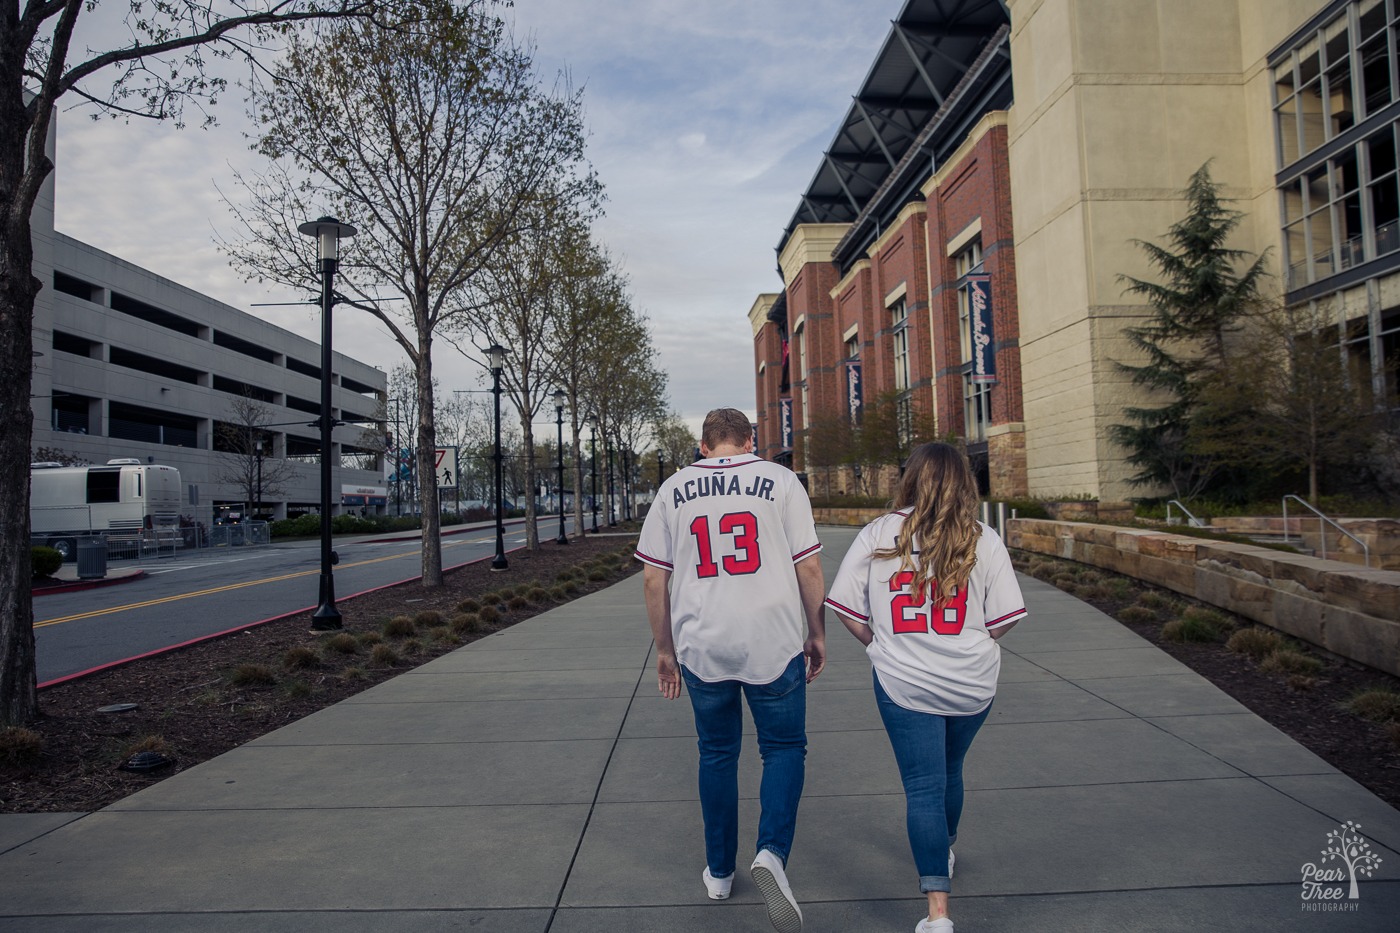 A man and woman wearing Braves jerseys walking towards the Atlanta Braves stadium